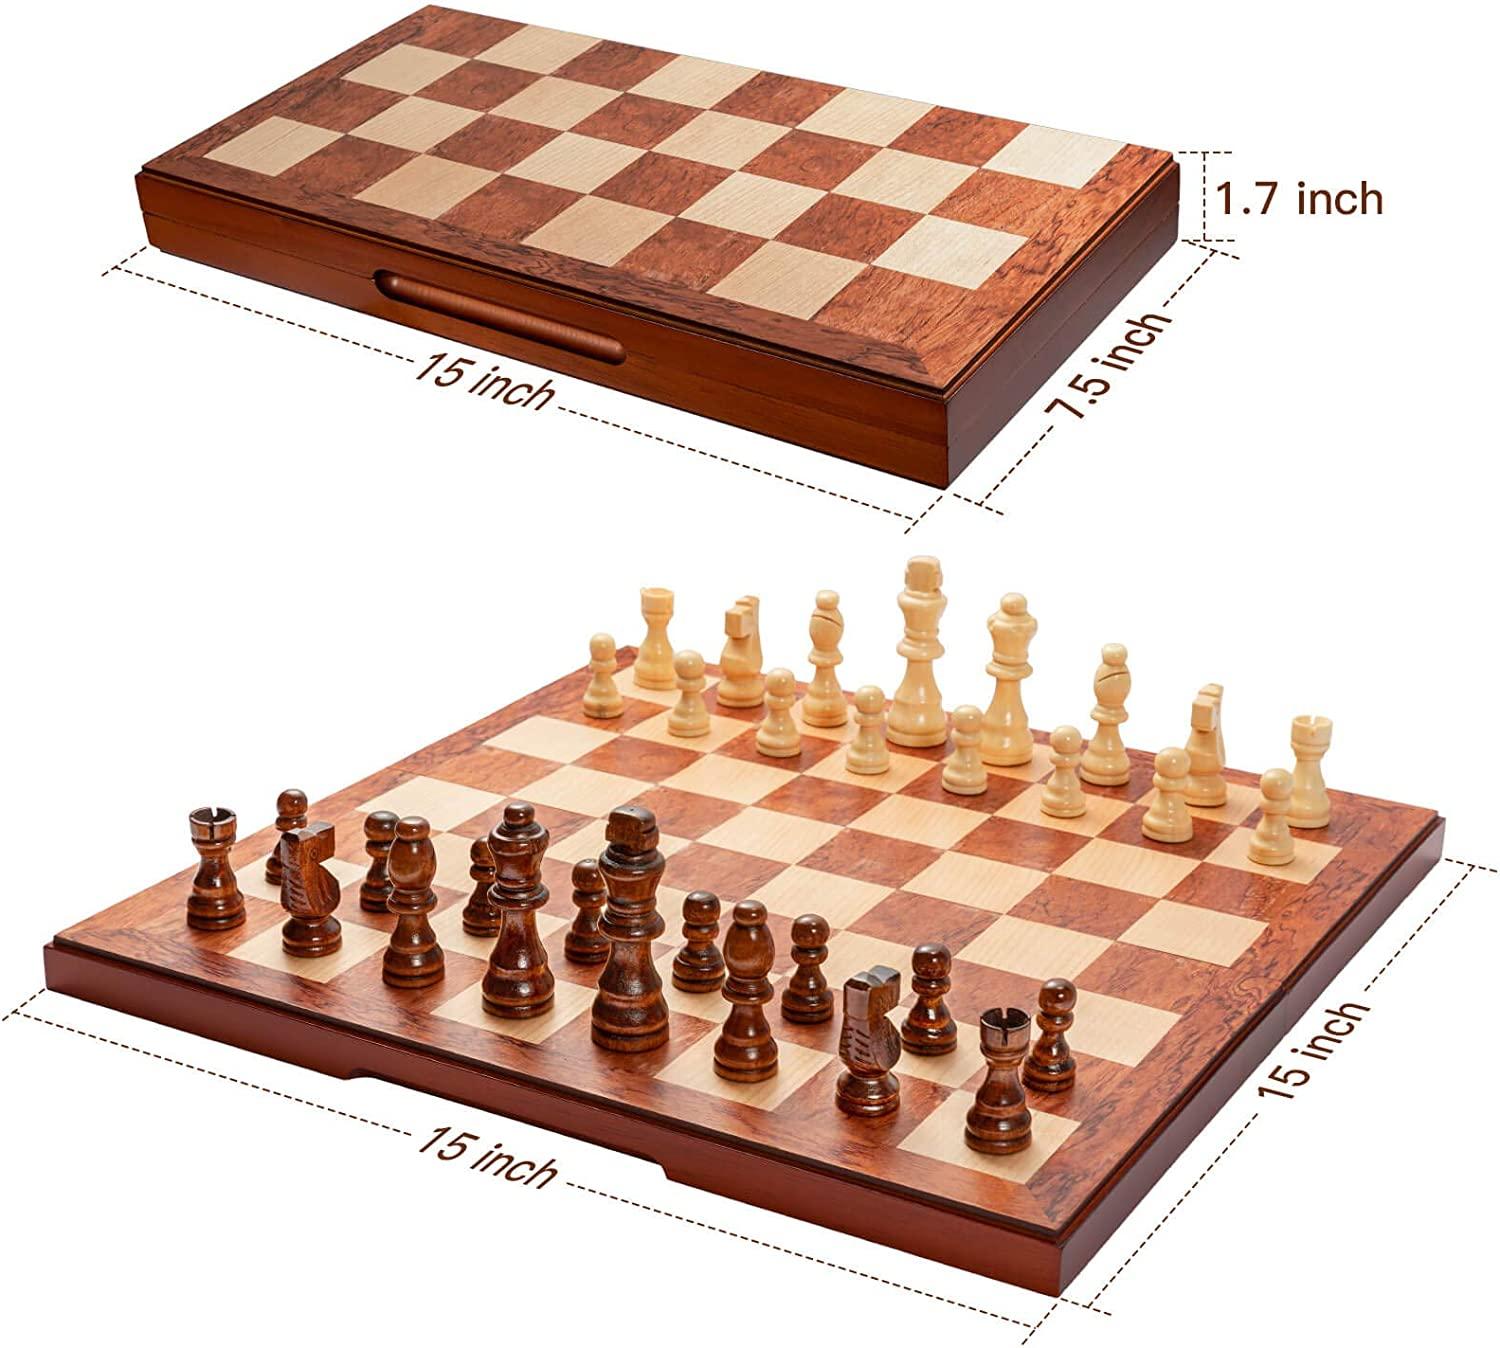 Handmade Olive Wood Chess Set With Storage - Artisraw